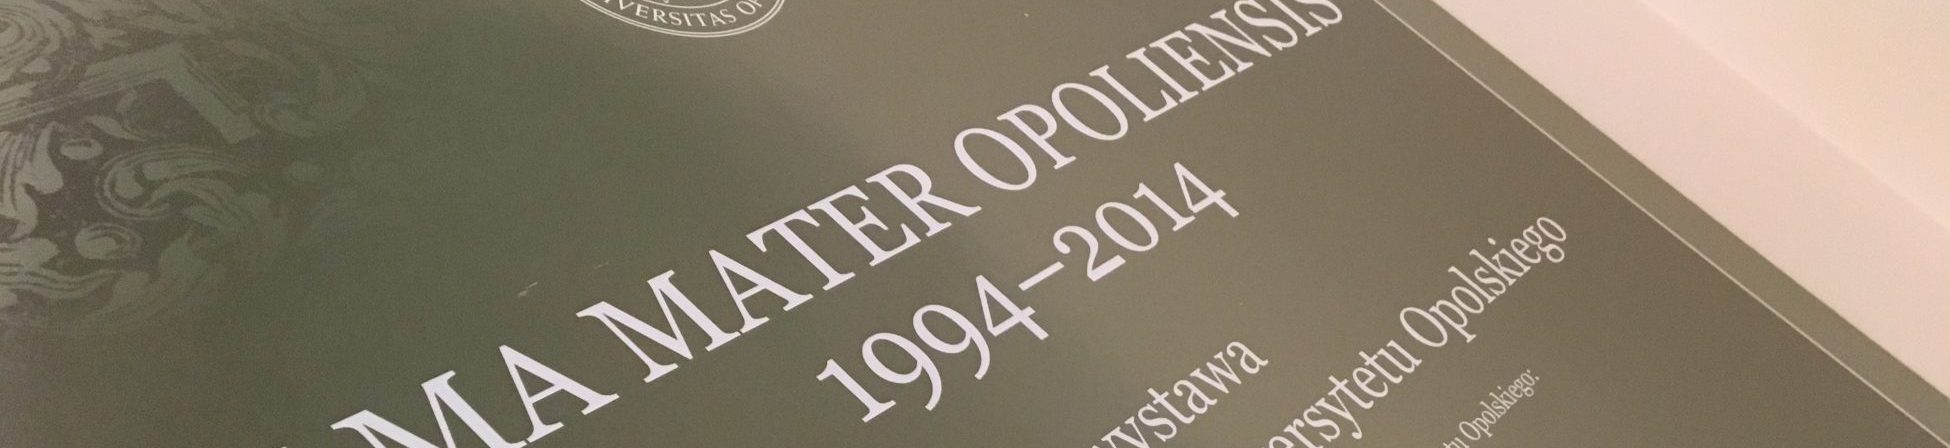 Alma Mater Opoliensis 1994-2014